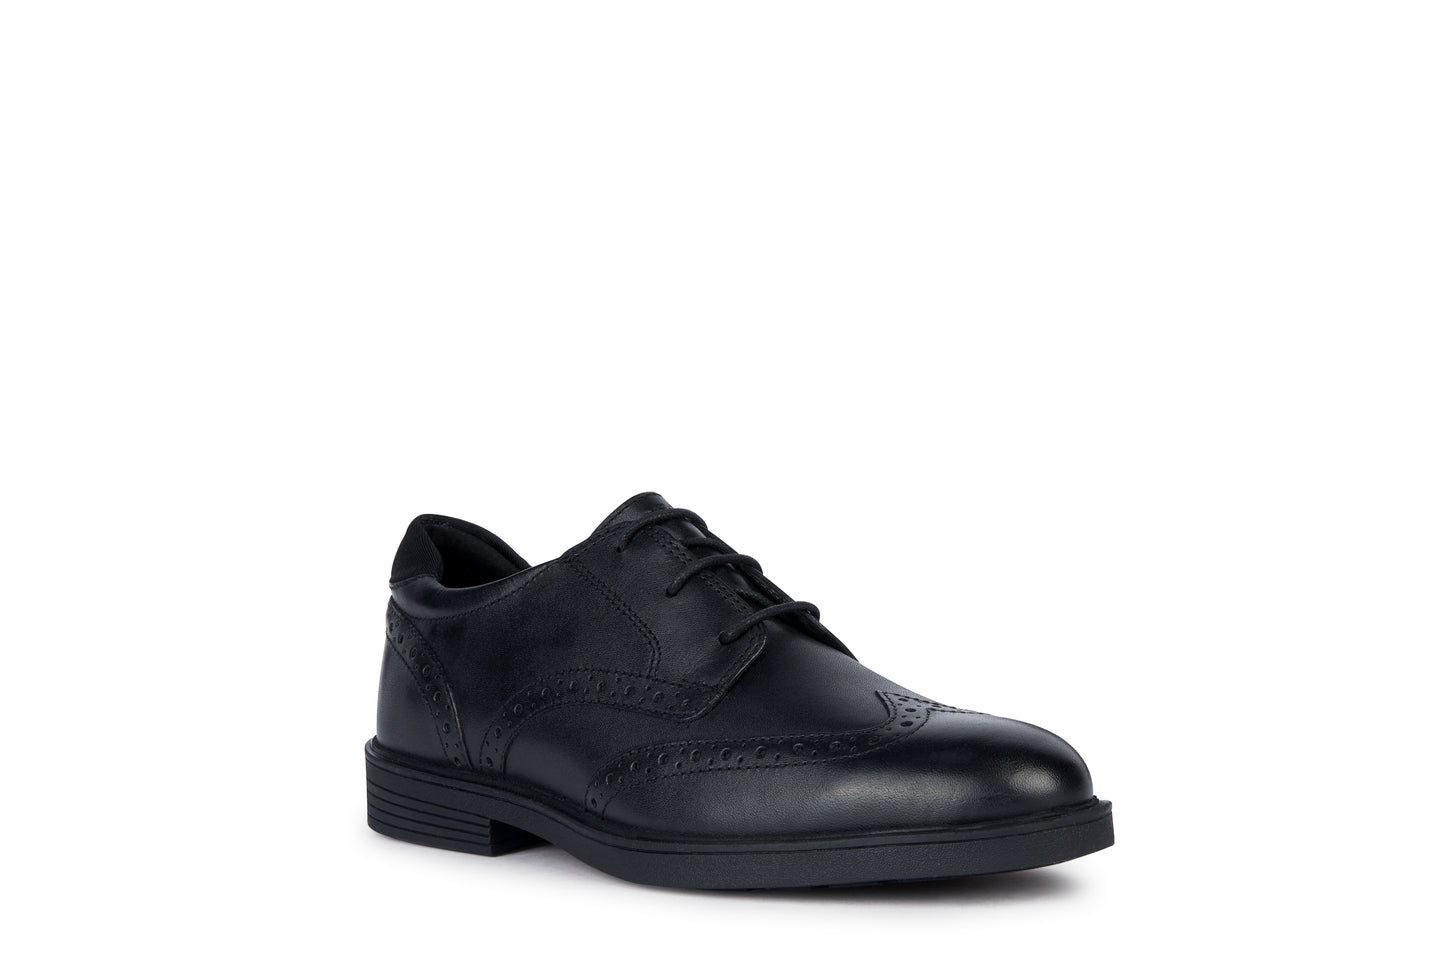 Zheeno Black Leather Brogue Lace-up Boys School Shoe